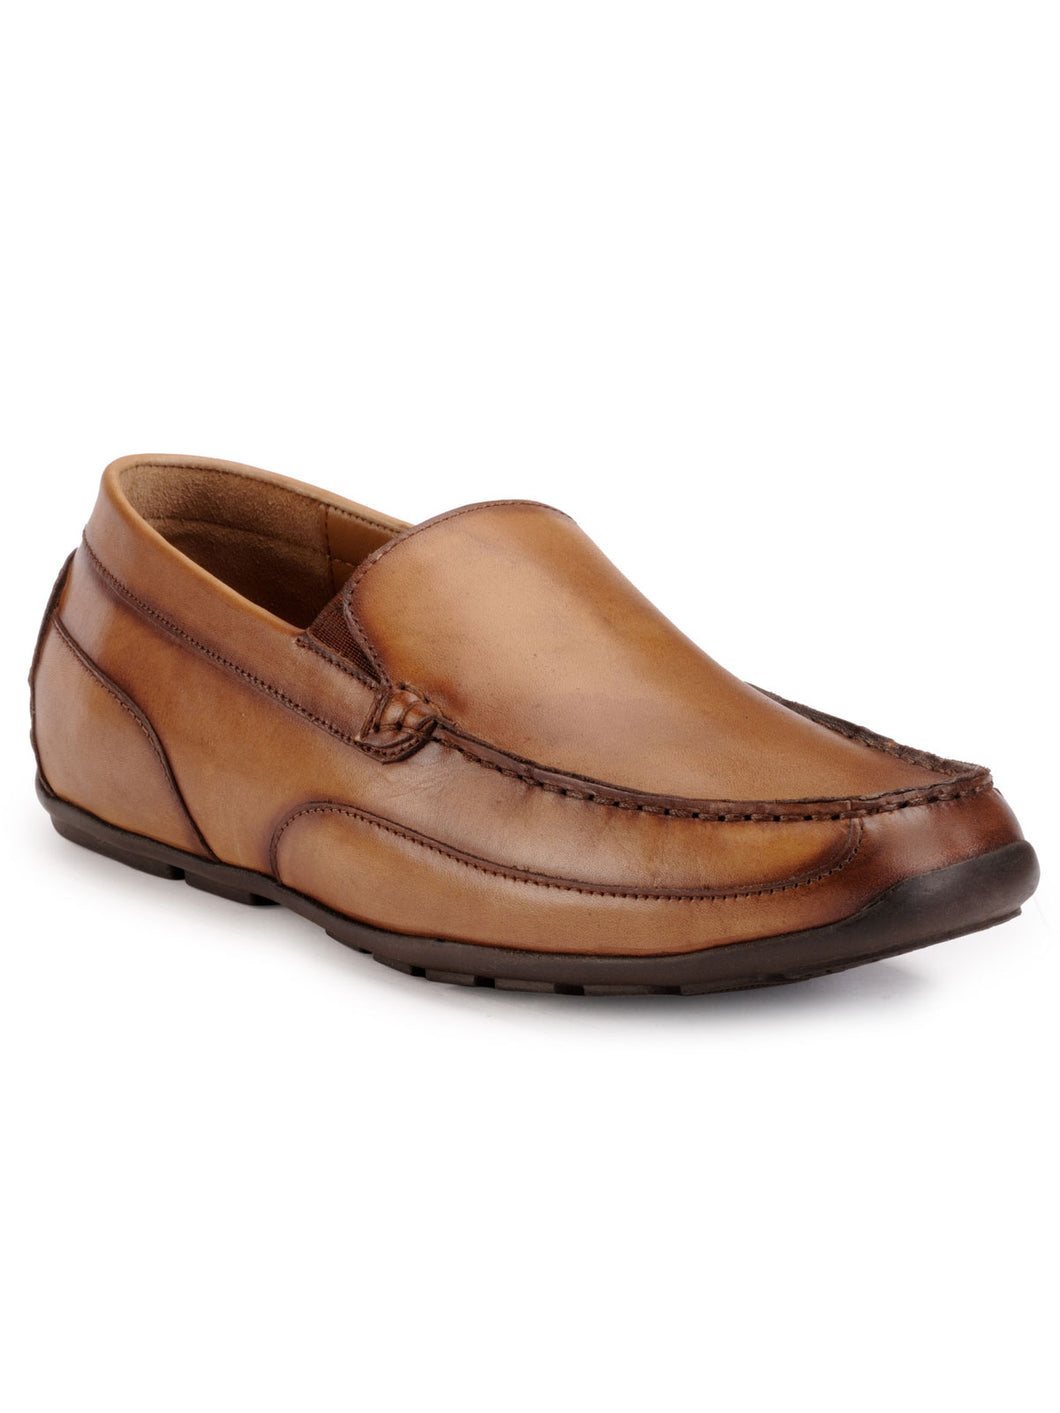 Teakwood Leather Men's Wood Slip-ons Shoes